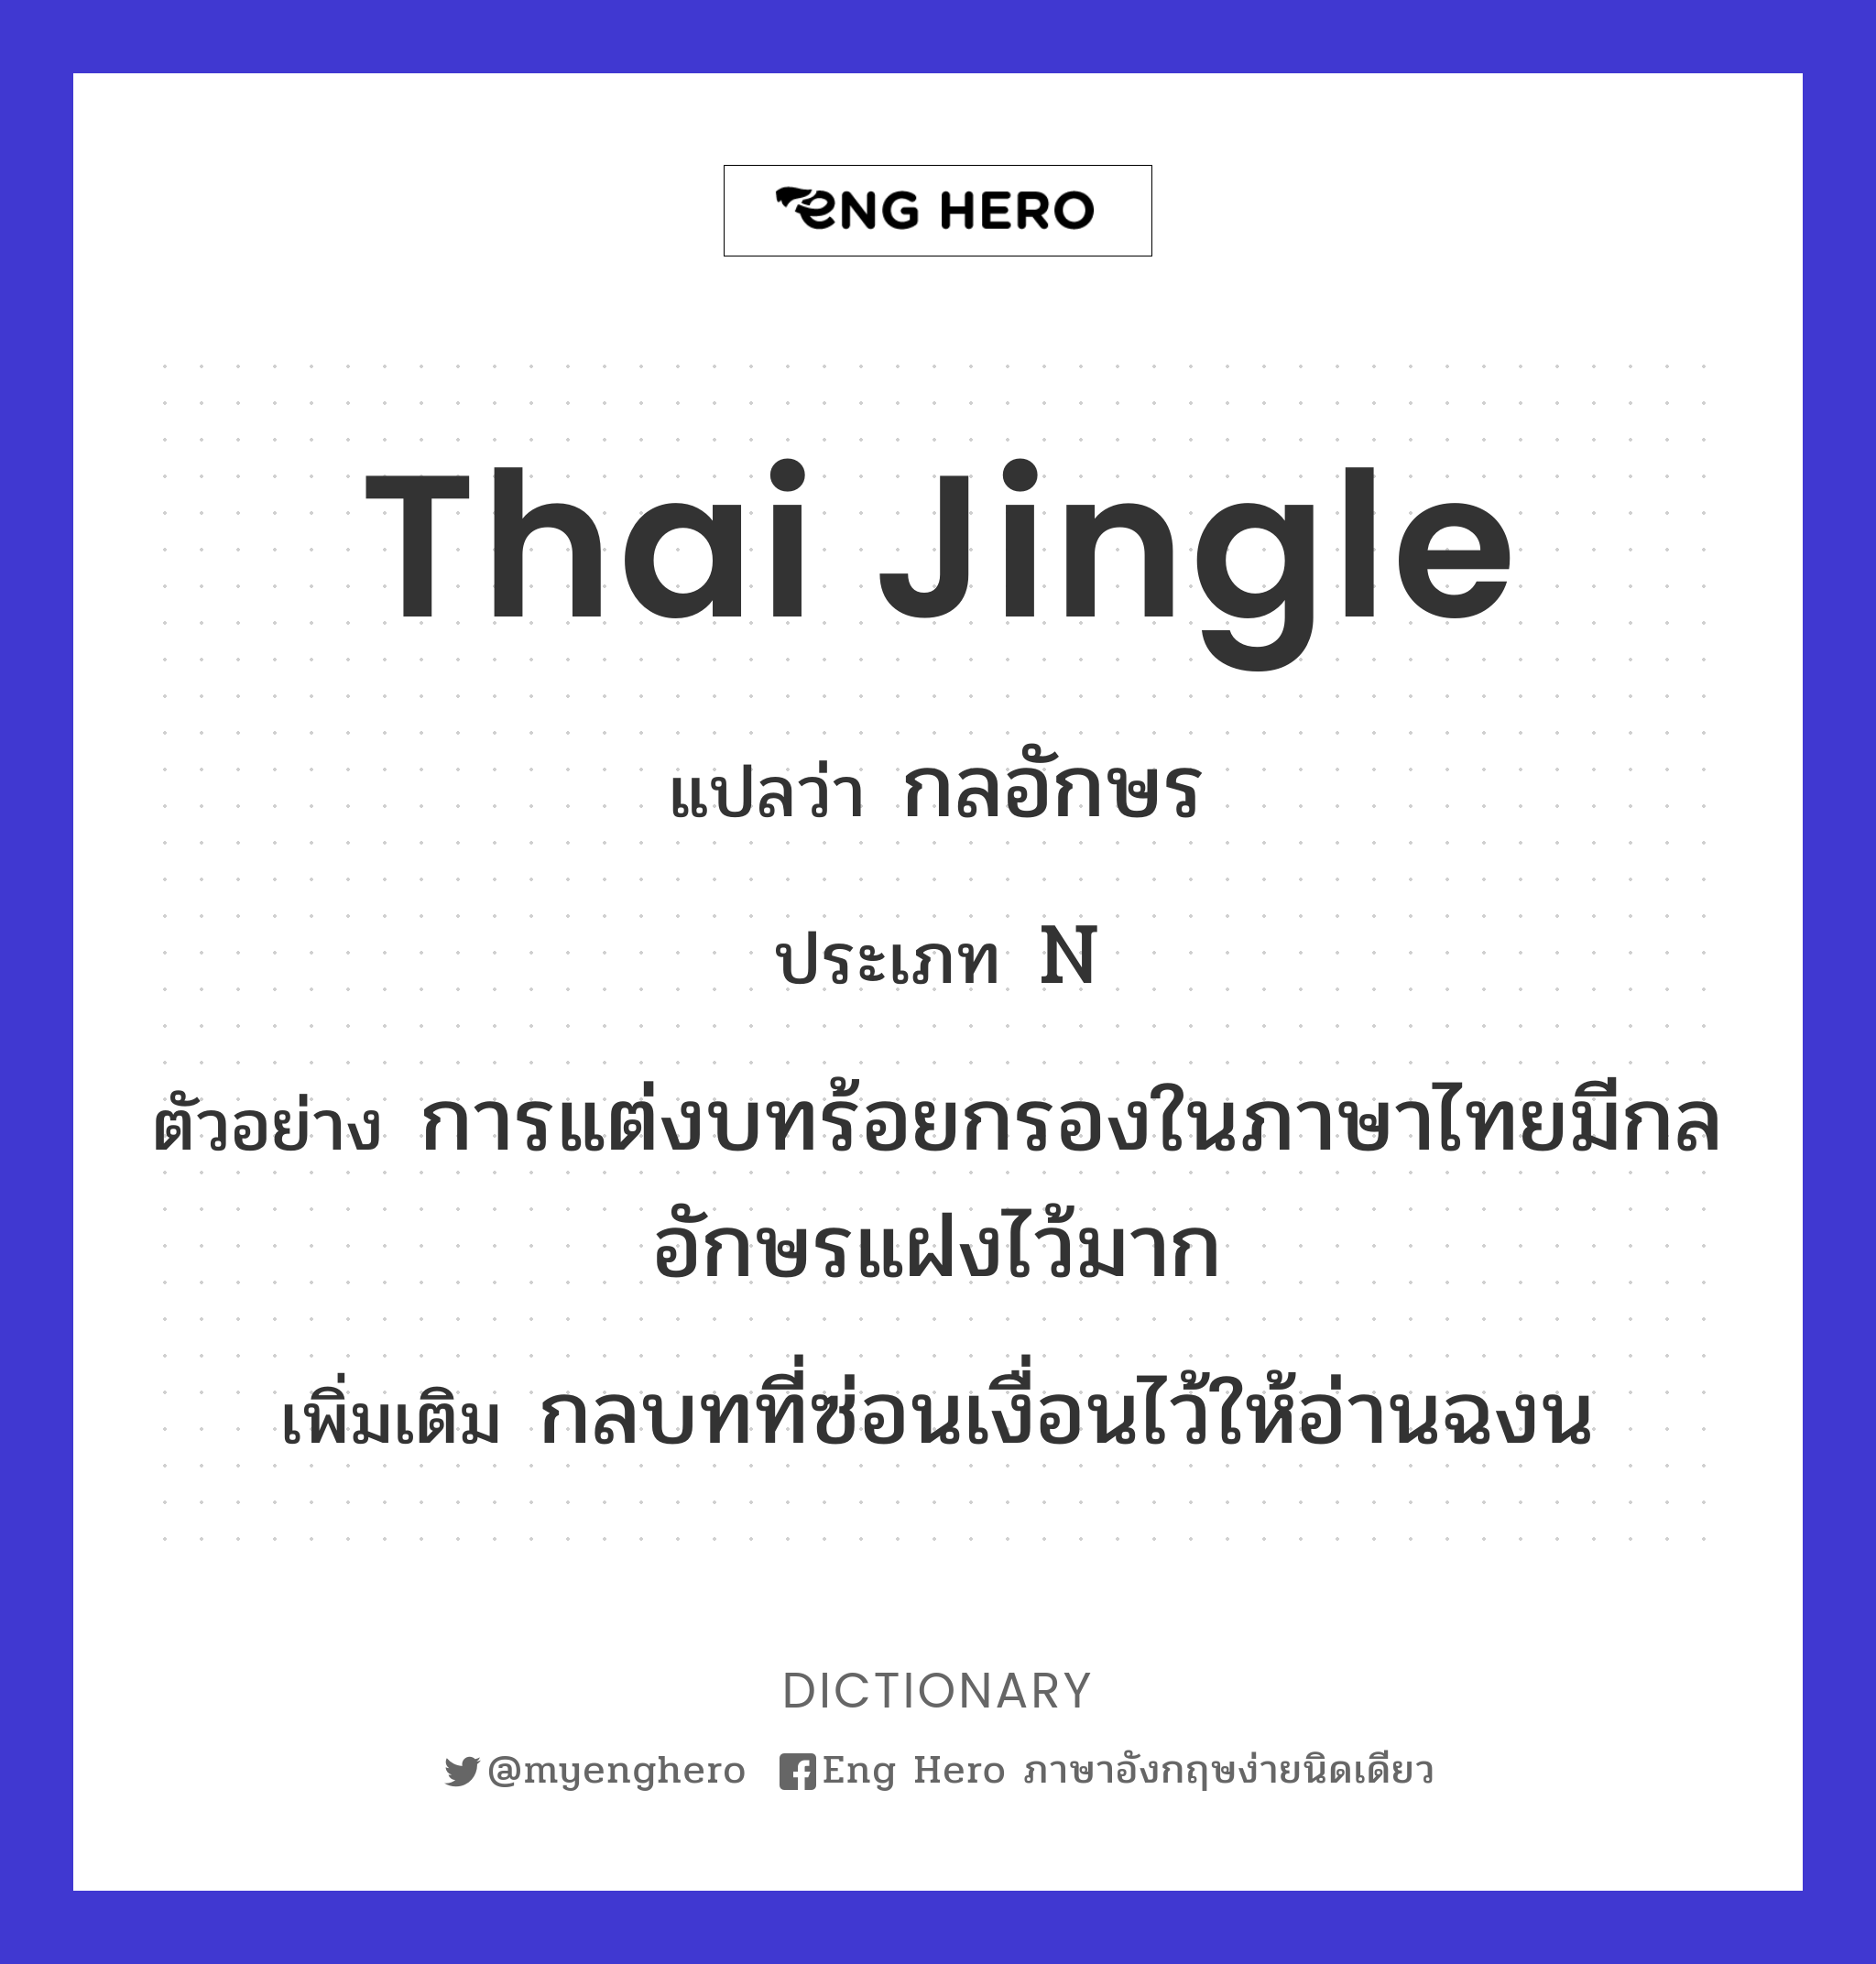 Thai jingle